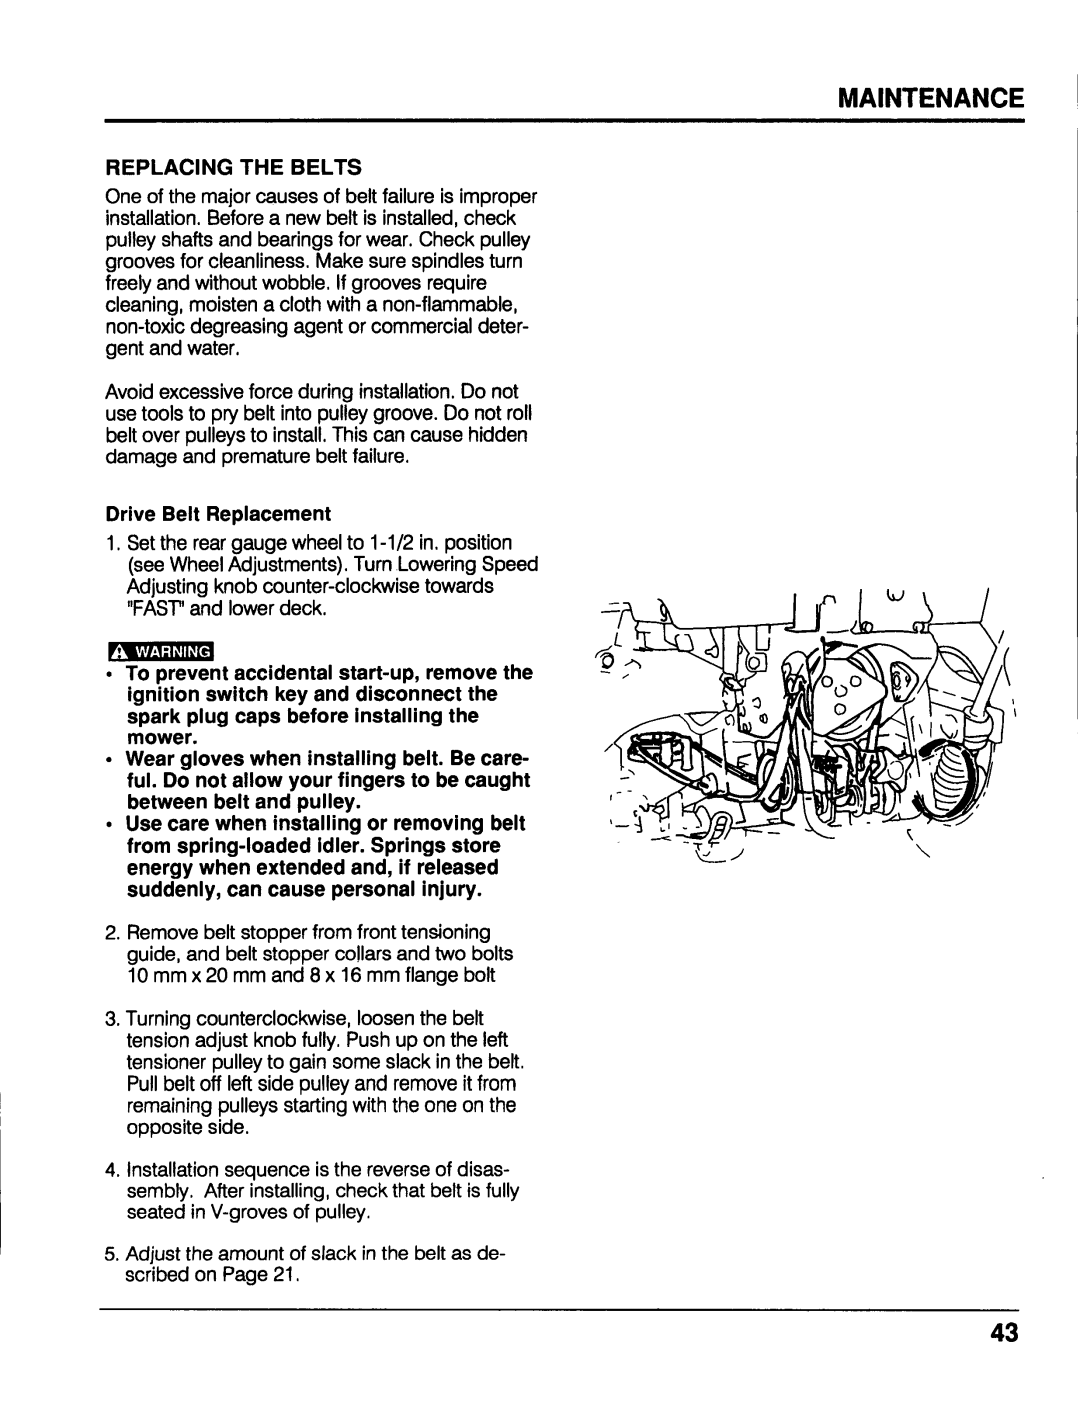 Honda Power Equipment MM52 manual Replacing The Belts, Drive Belt Replacement 